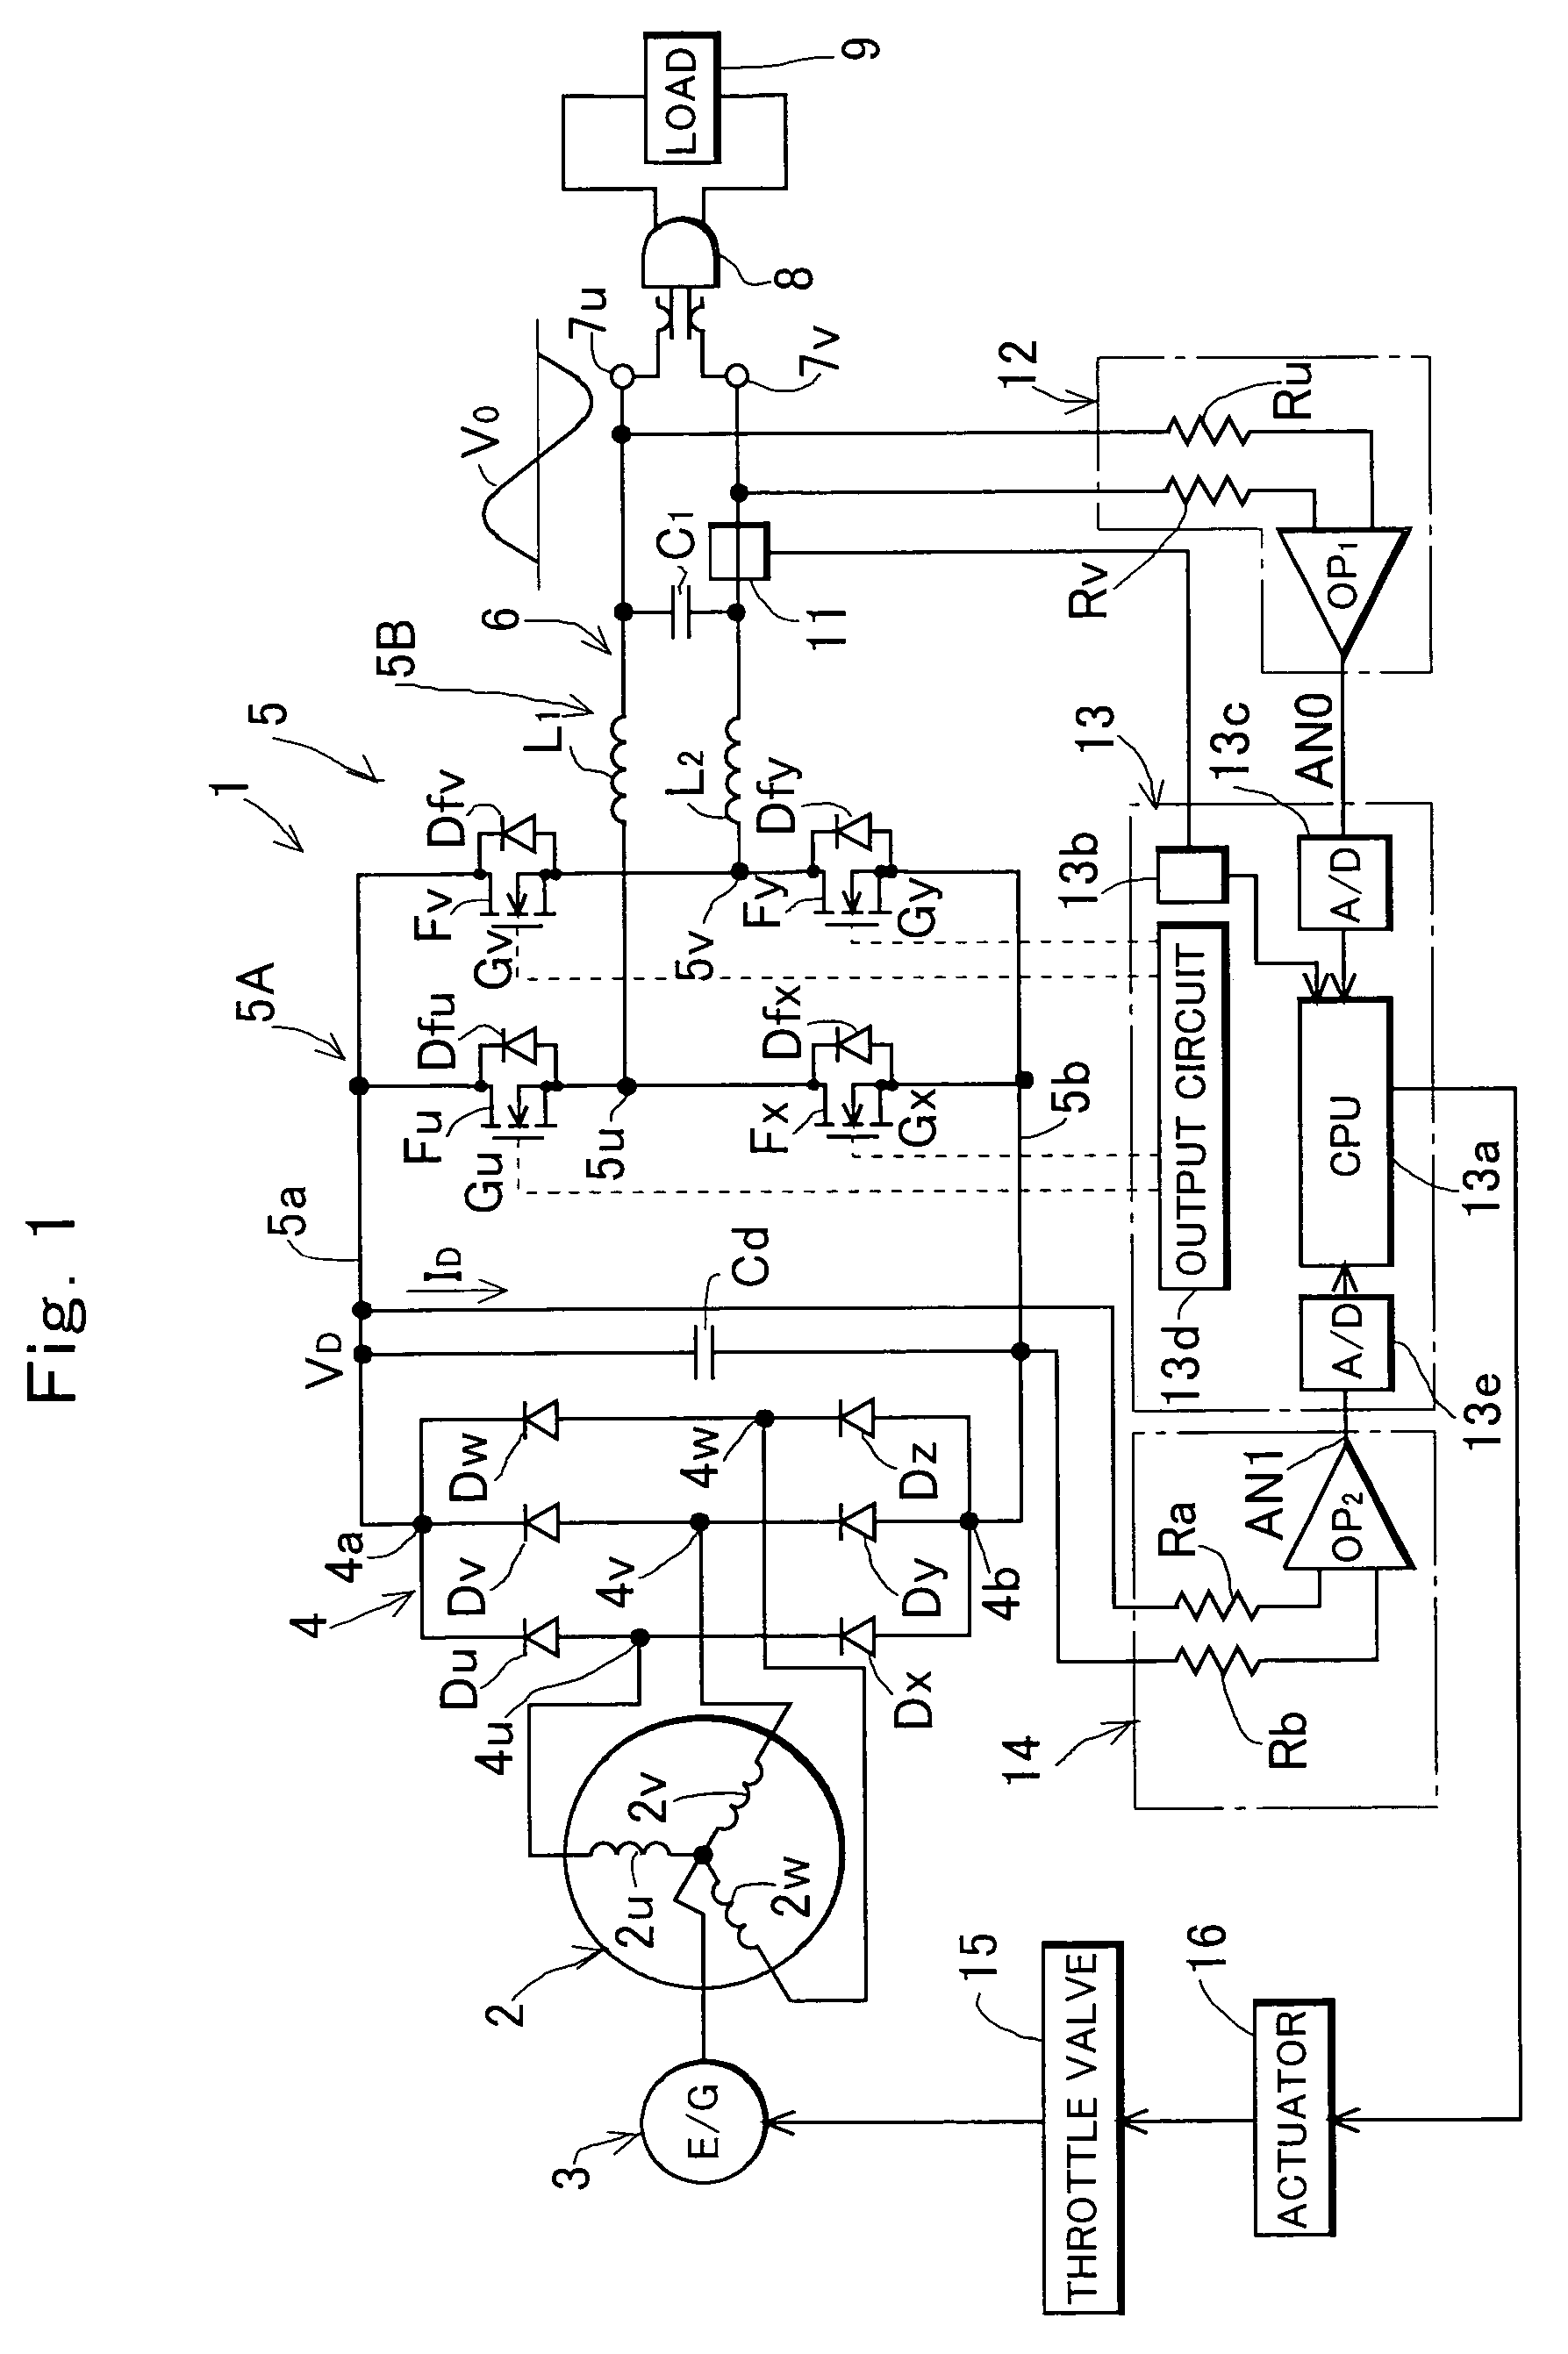 Inverter controlled generator set